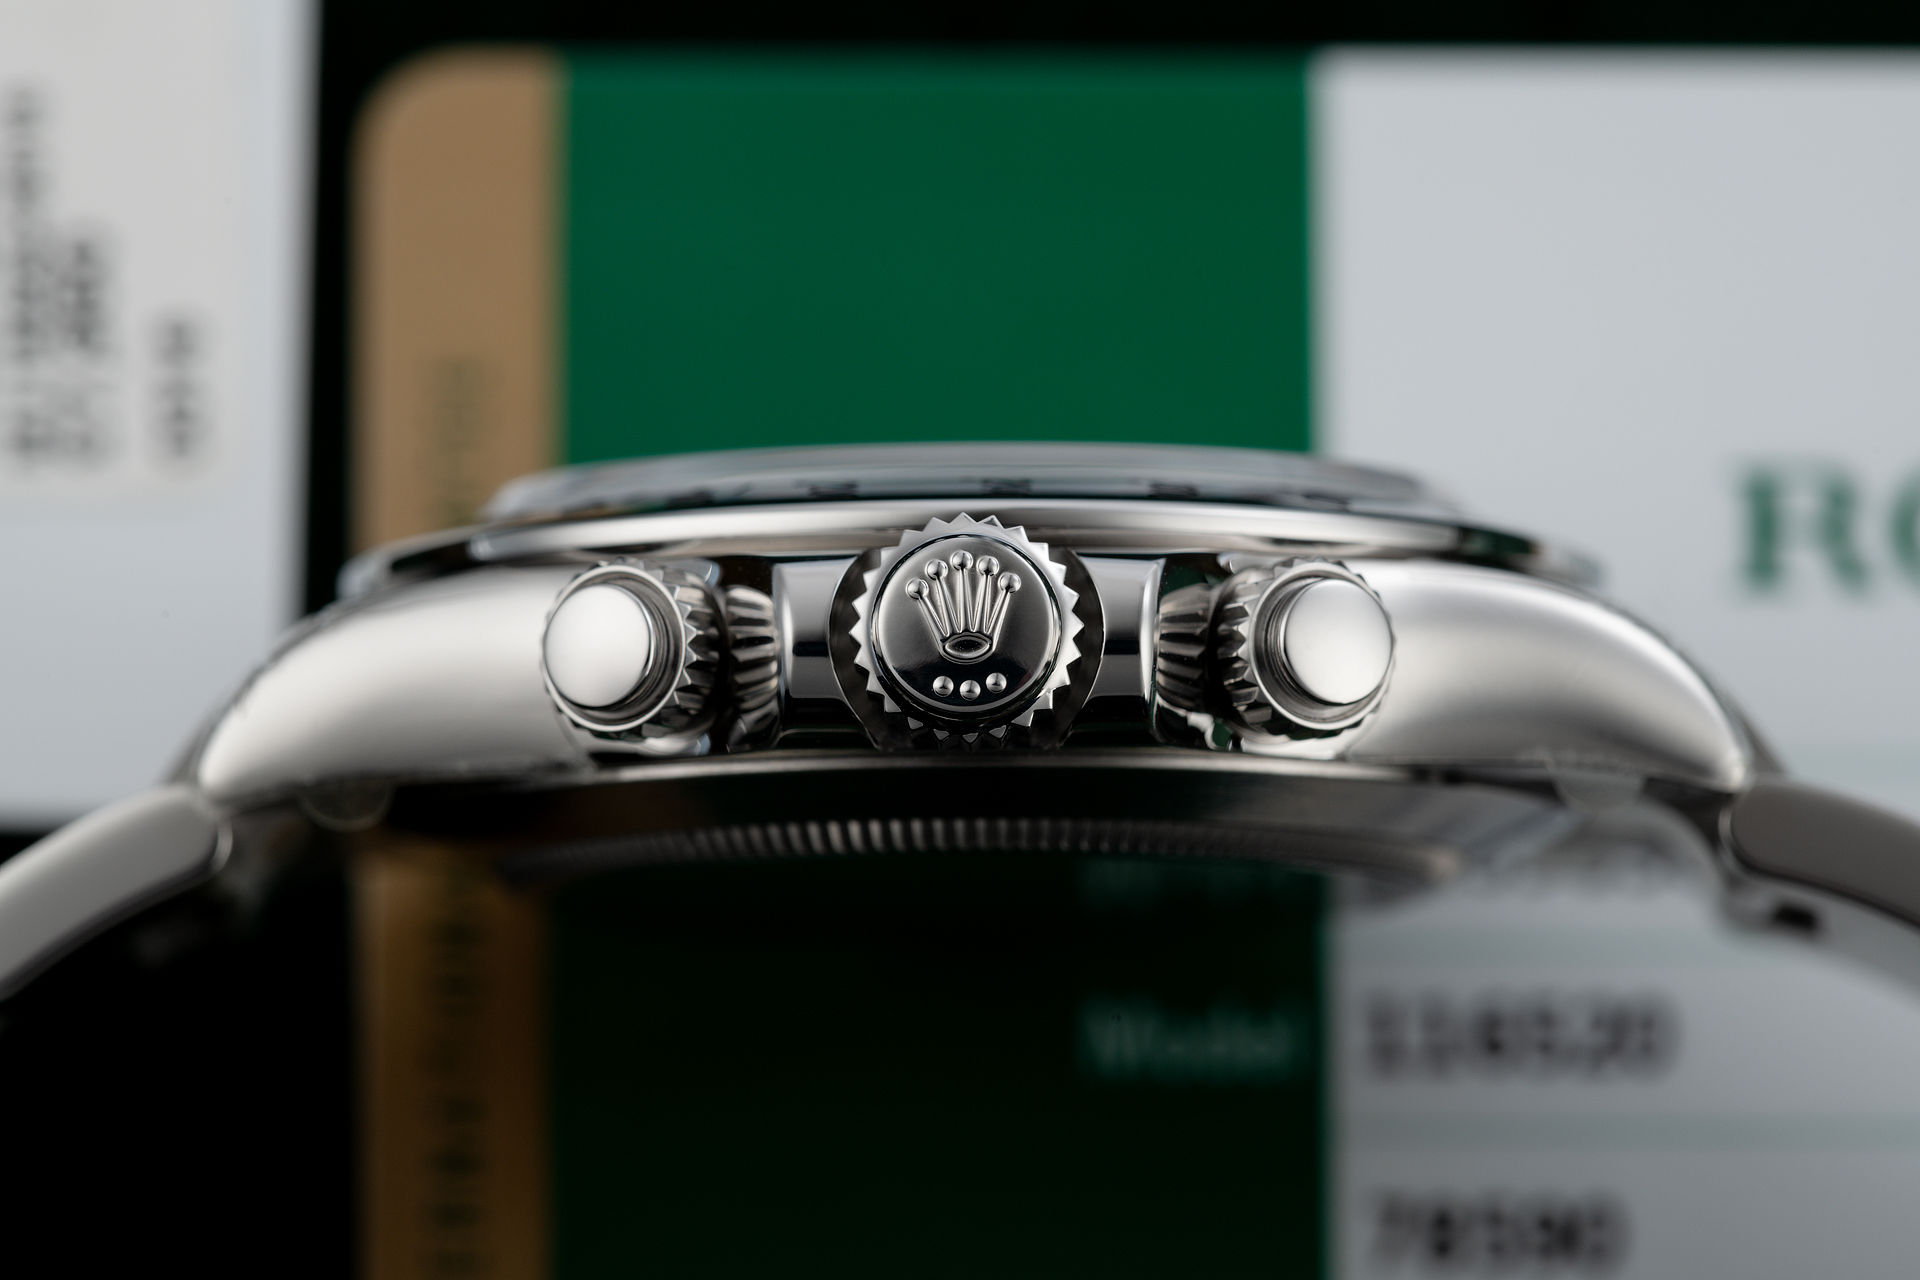 ref 116520 | Brand New 'NOS' 'Last Model' | Rolex Cosmograph Daytona